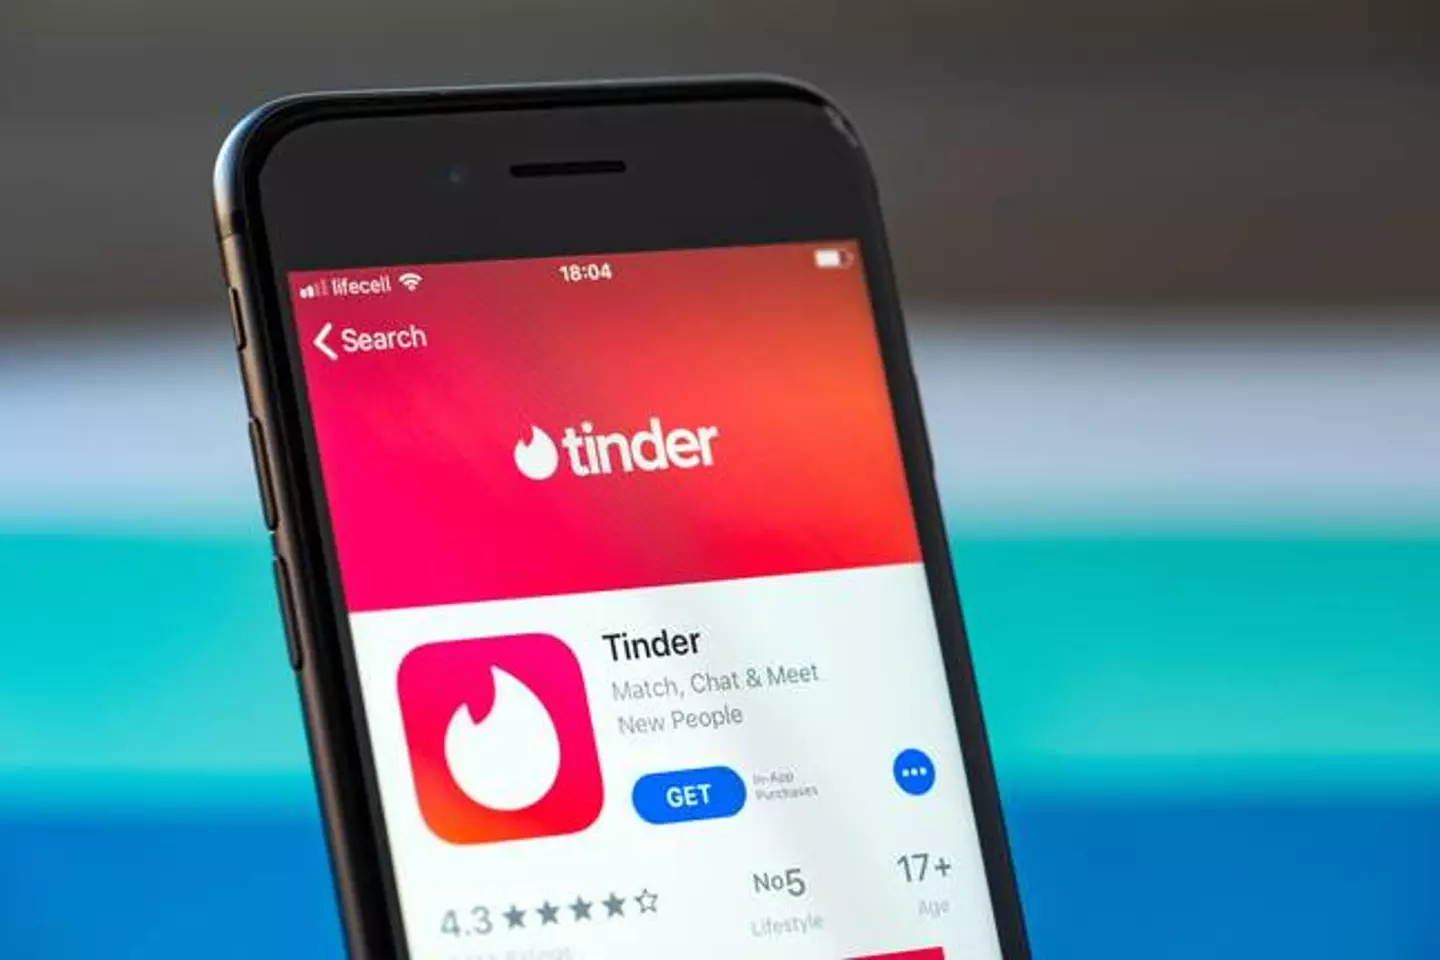 The Tinder app.